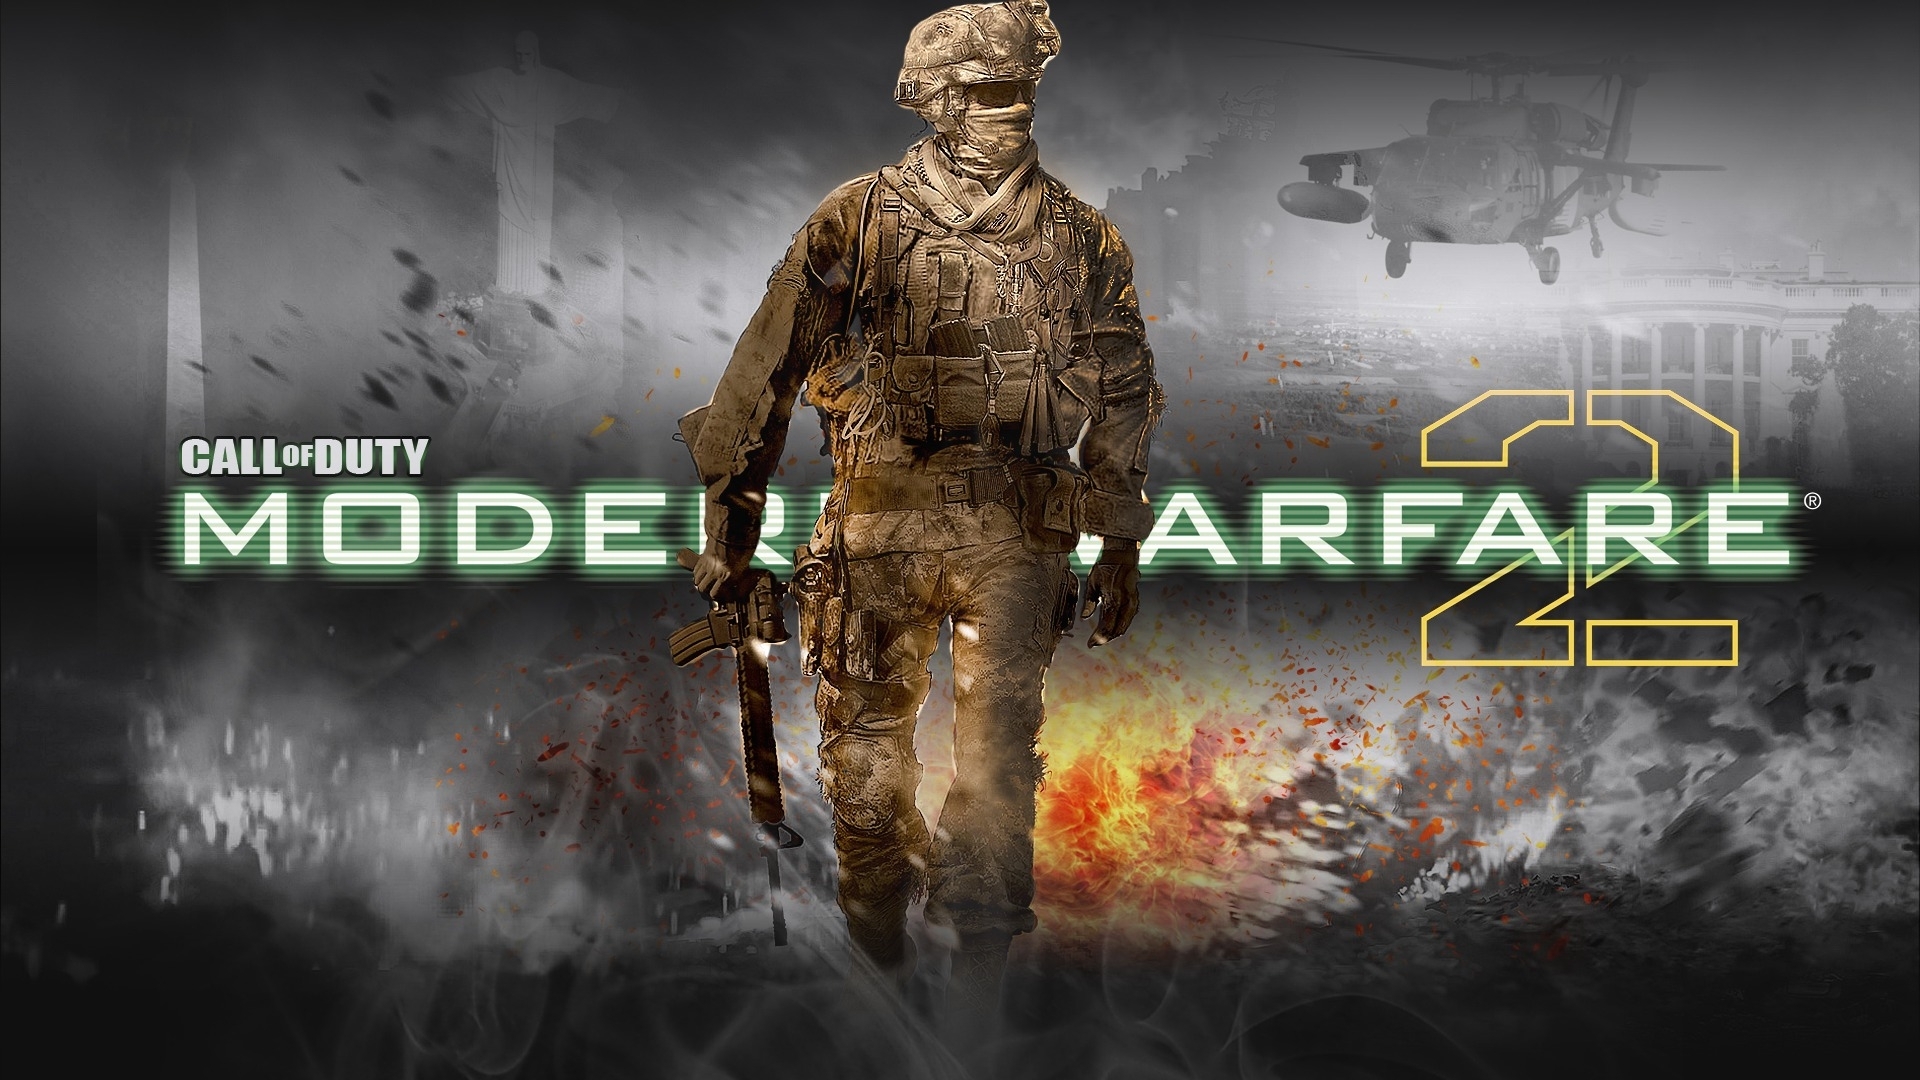 6. "Modern Warfare Discount Code" on Twitch - wide 5